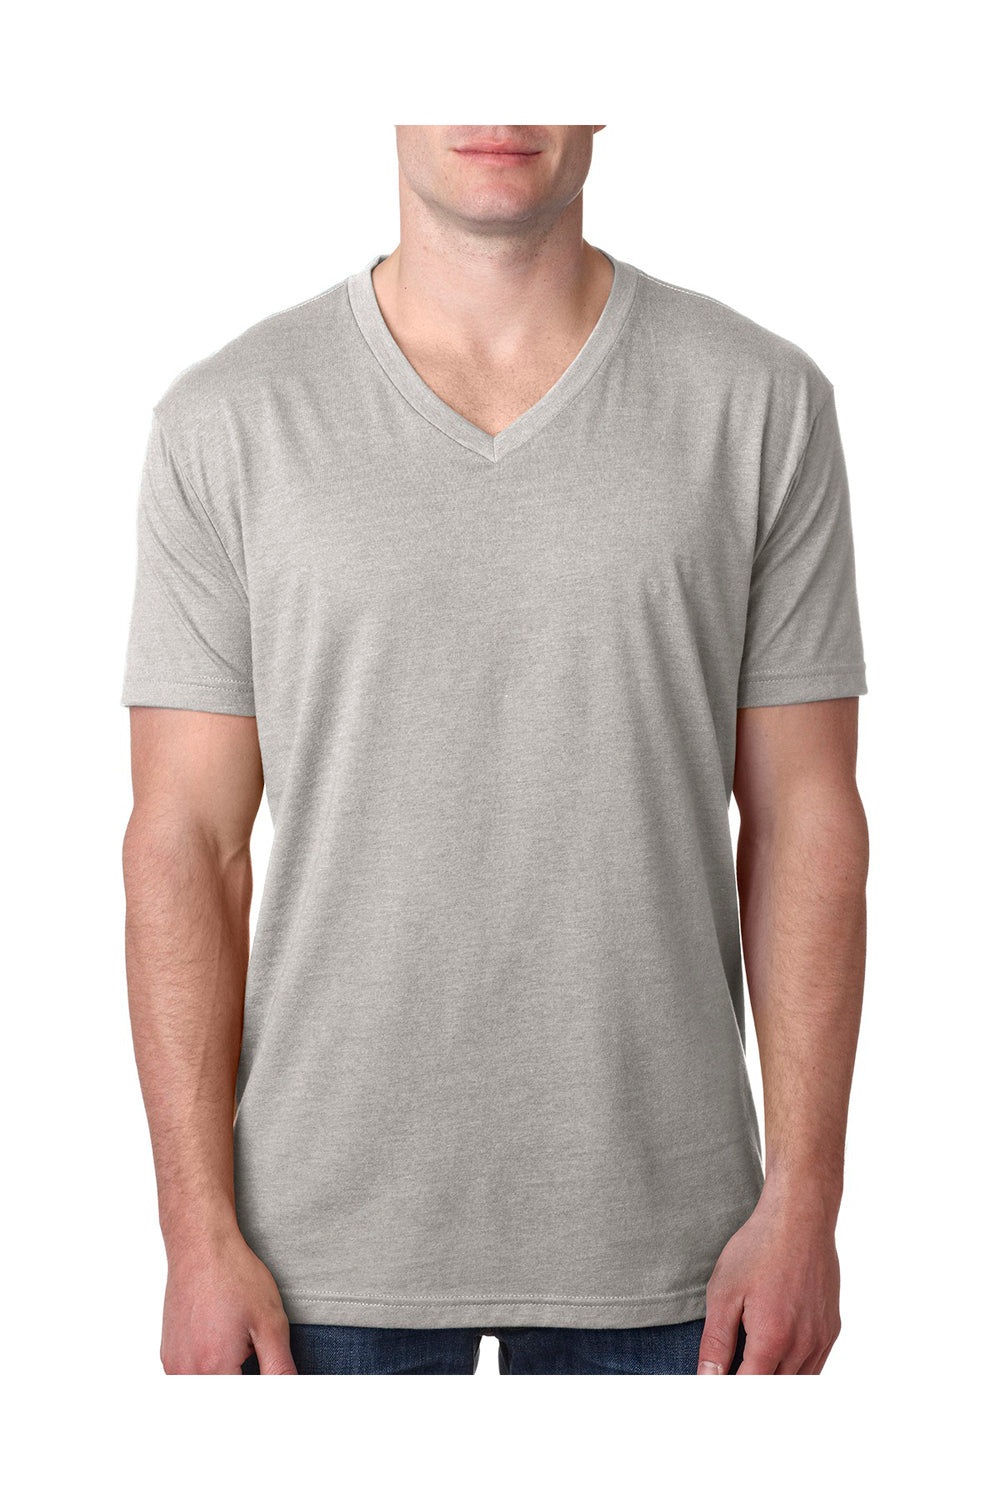 Next Level 6240 Mens CVC Jersey Short Sleeve V-Neck T-Shirt Silk Grey Front